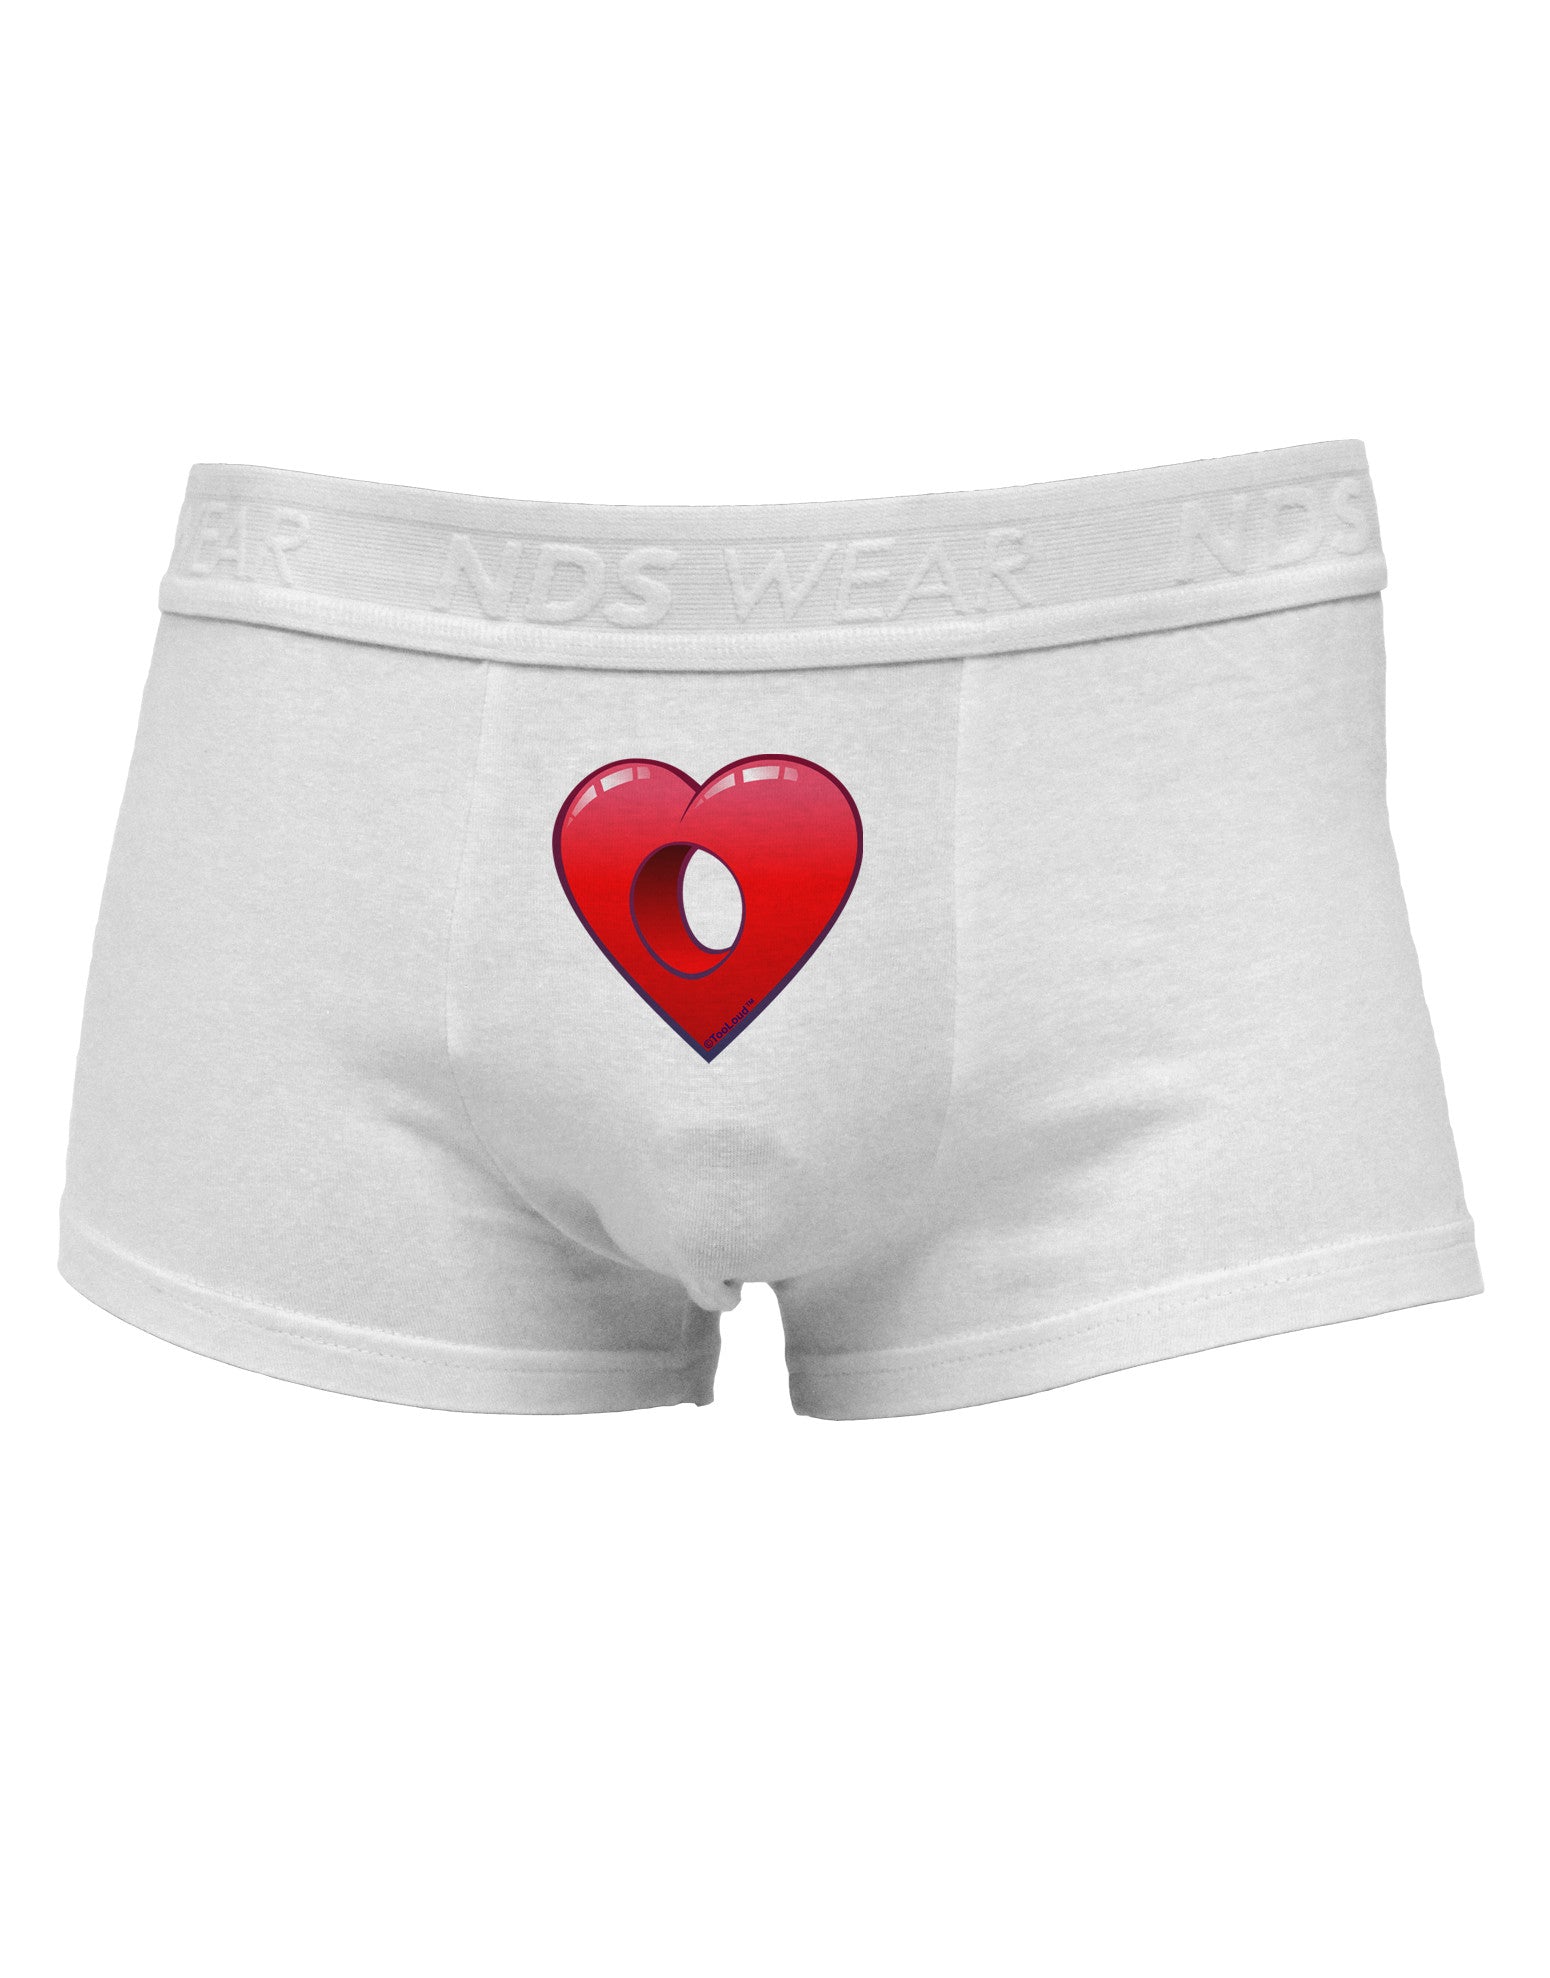 Hole Heartedly Broken Heart Mens Cotton Trunk Underwear by NDS Wear -  Davson Sales